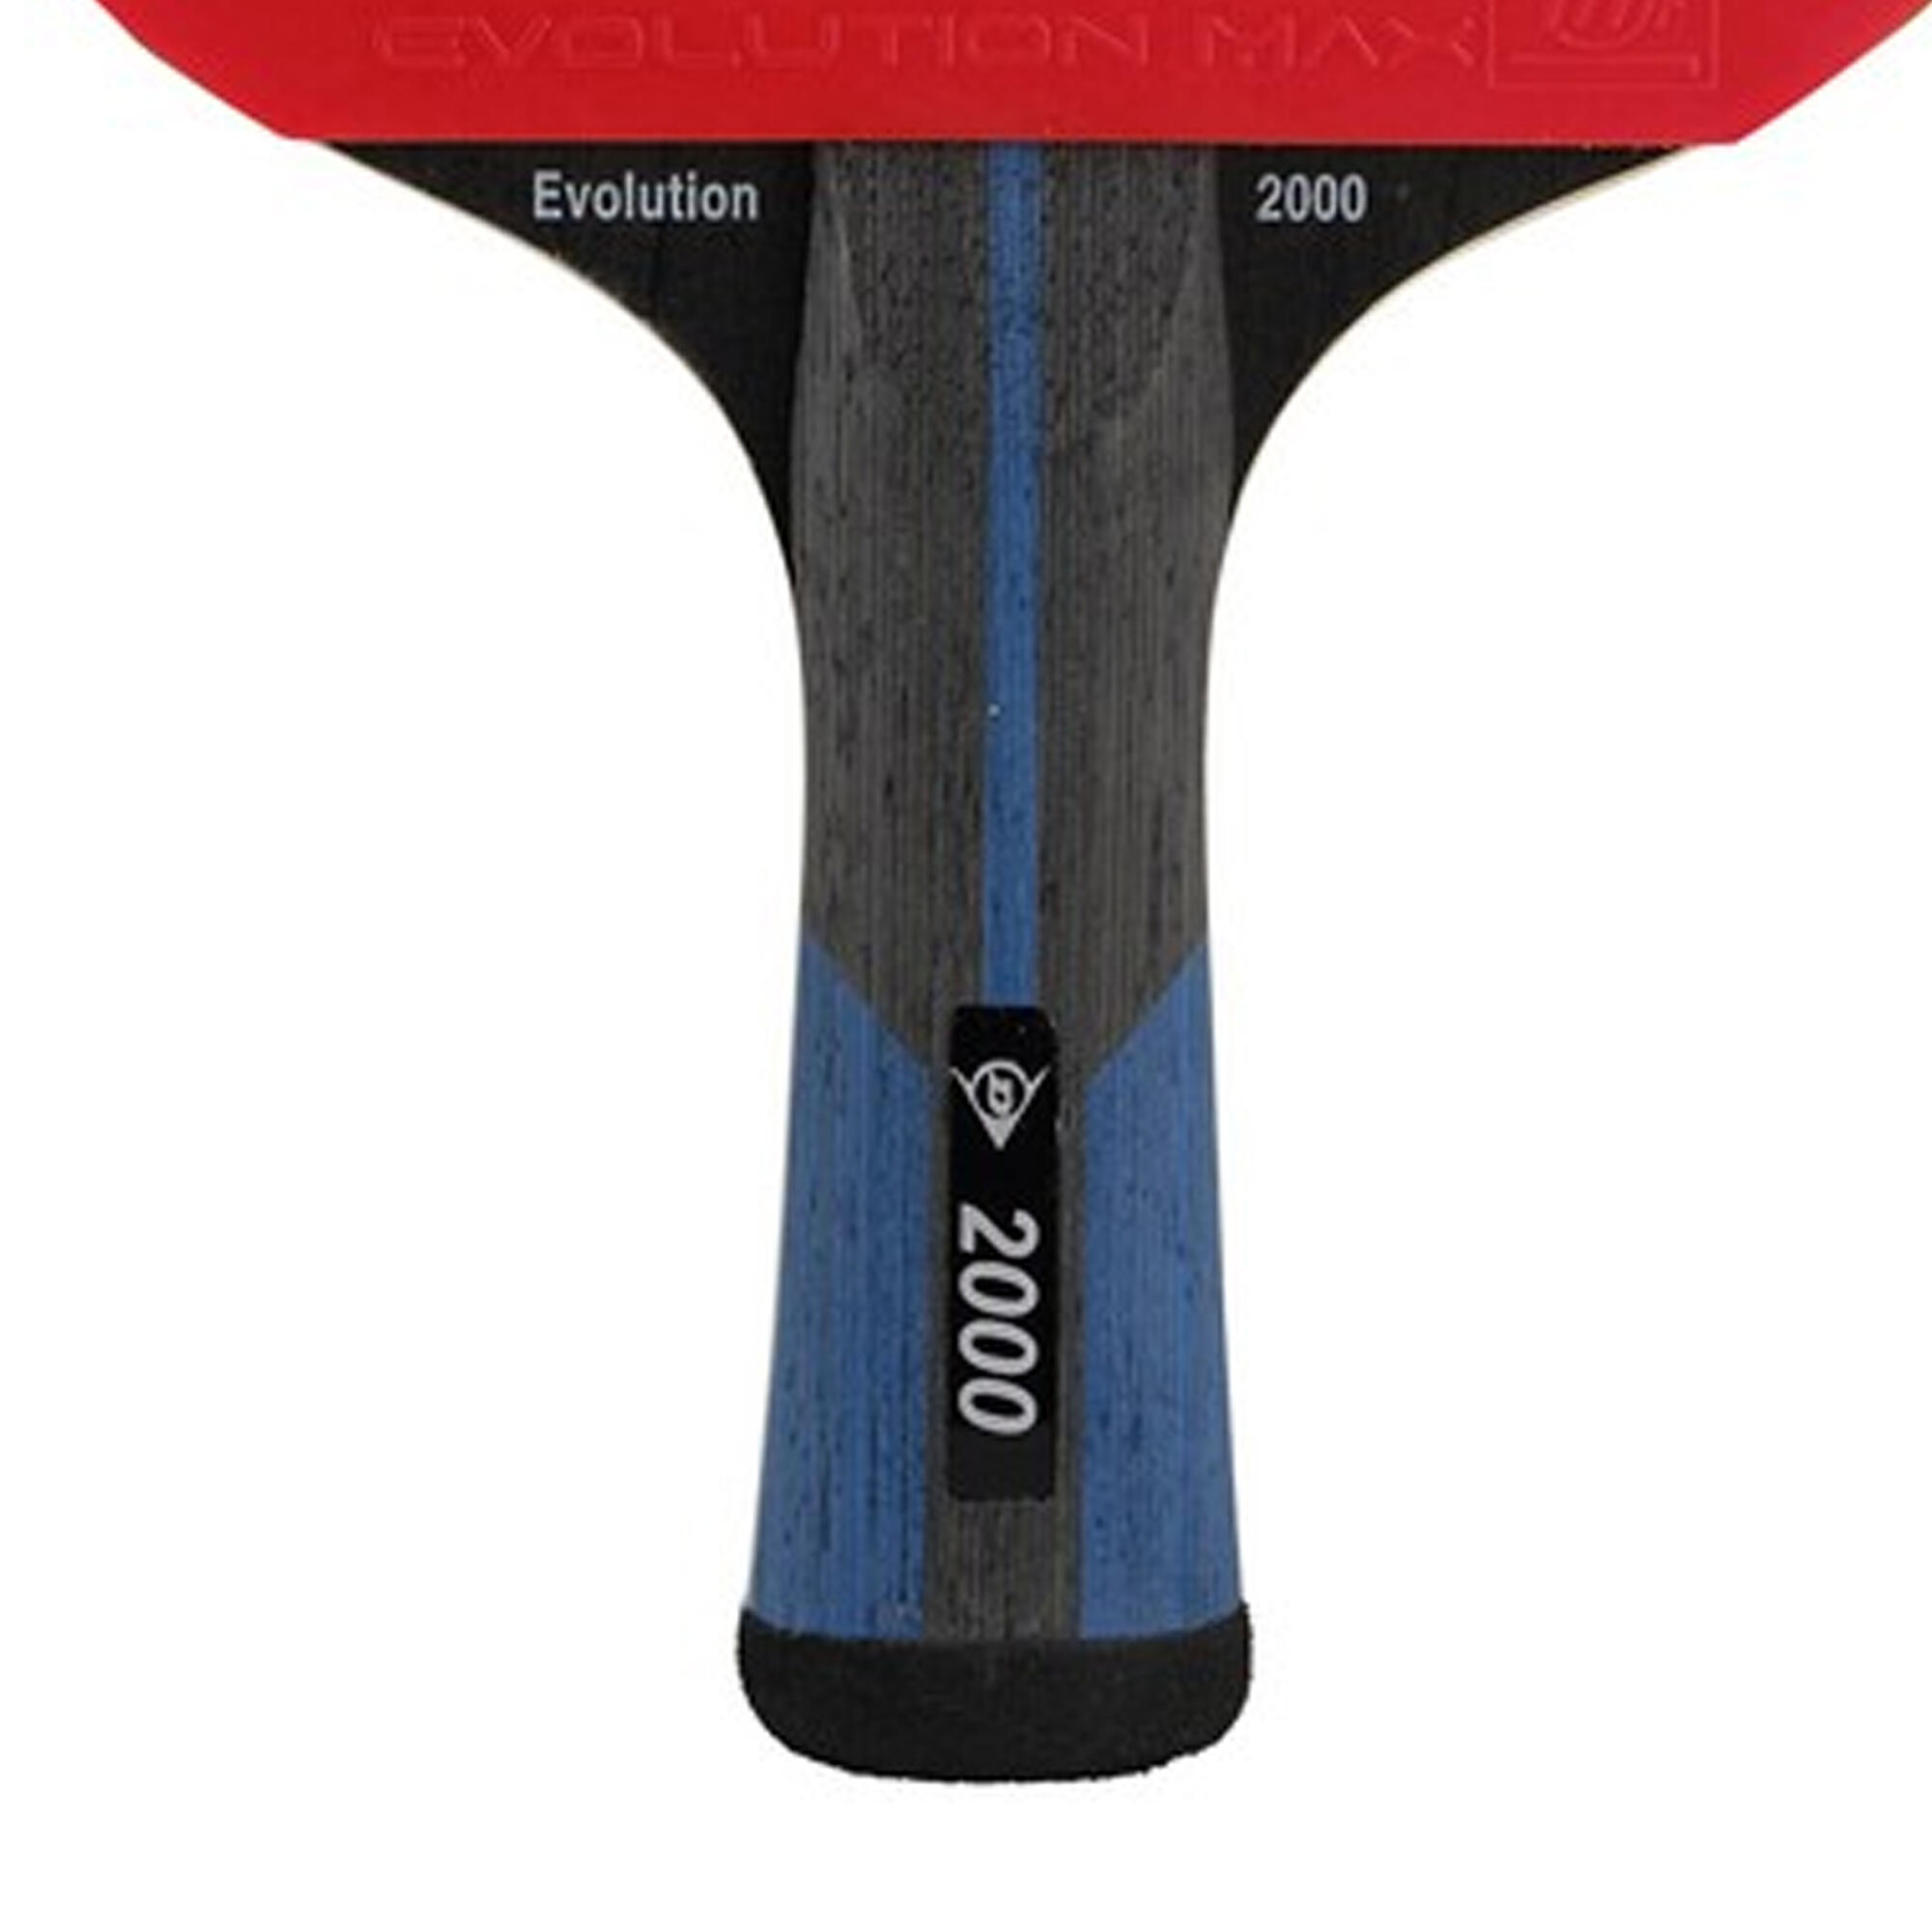 Evolution 2000 Table Tennis Bat (Red/Black/Blue) 3/3